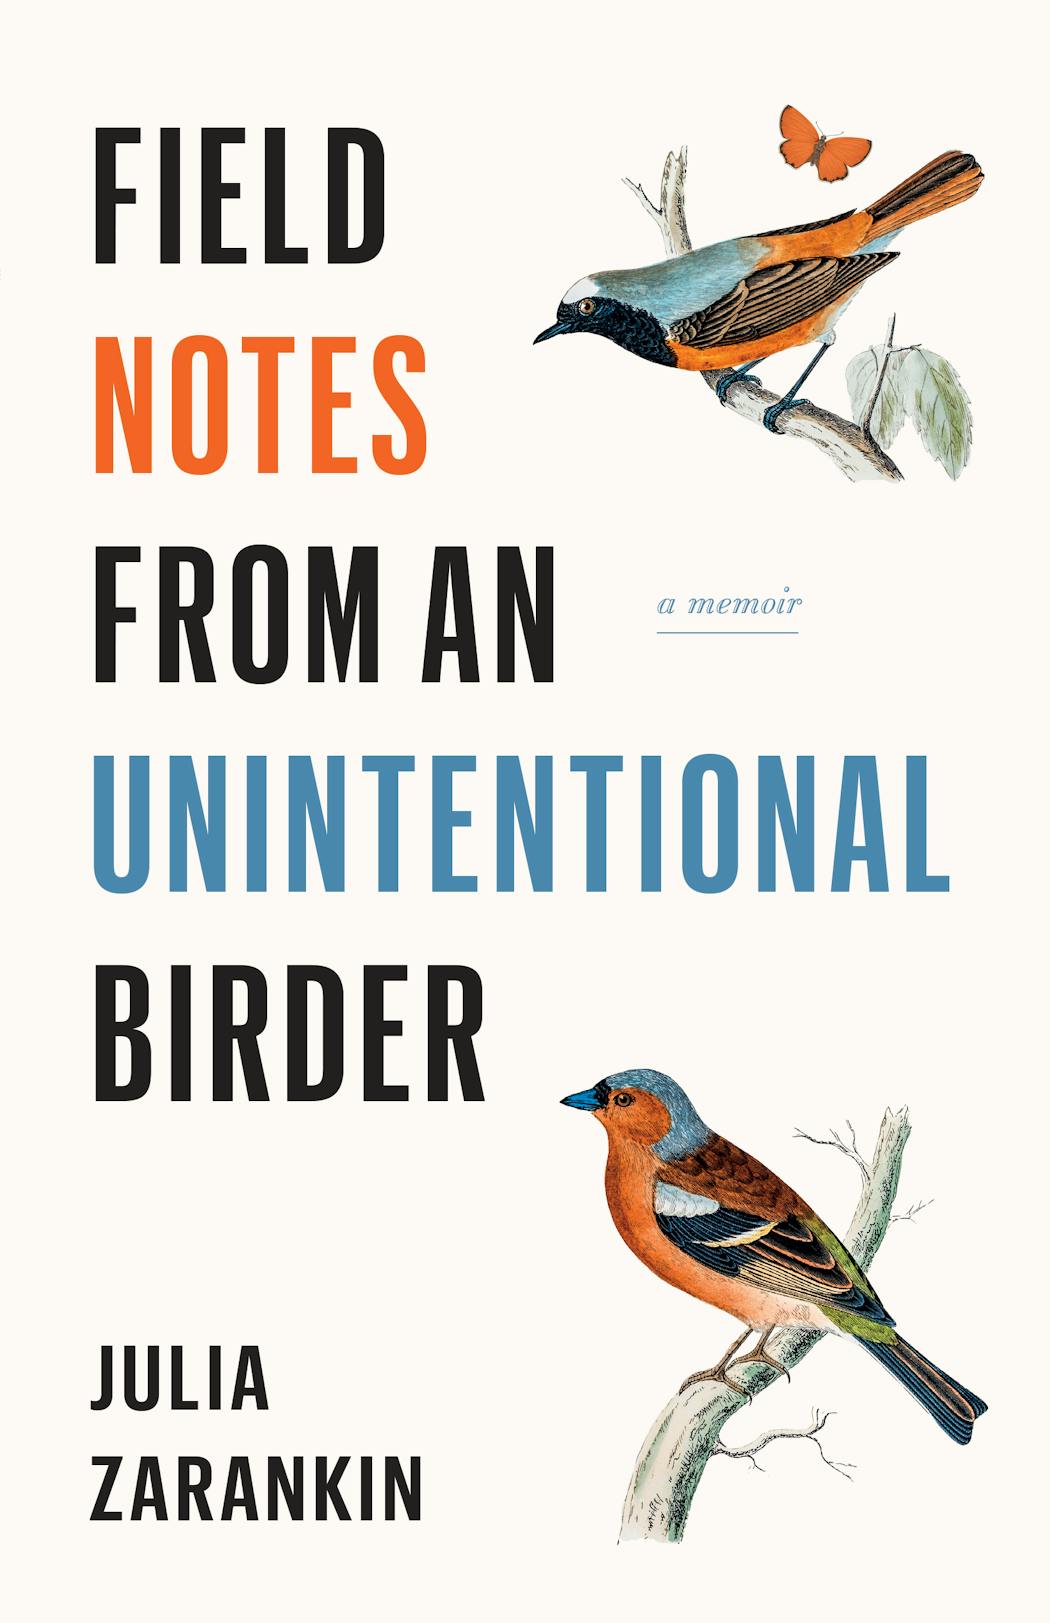 “Field Notes from an Unintentional Birder,” by Julia Zarankin